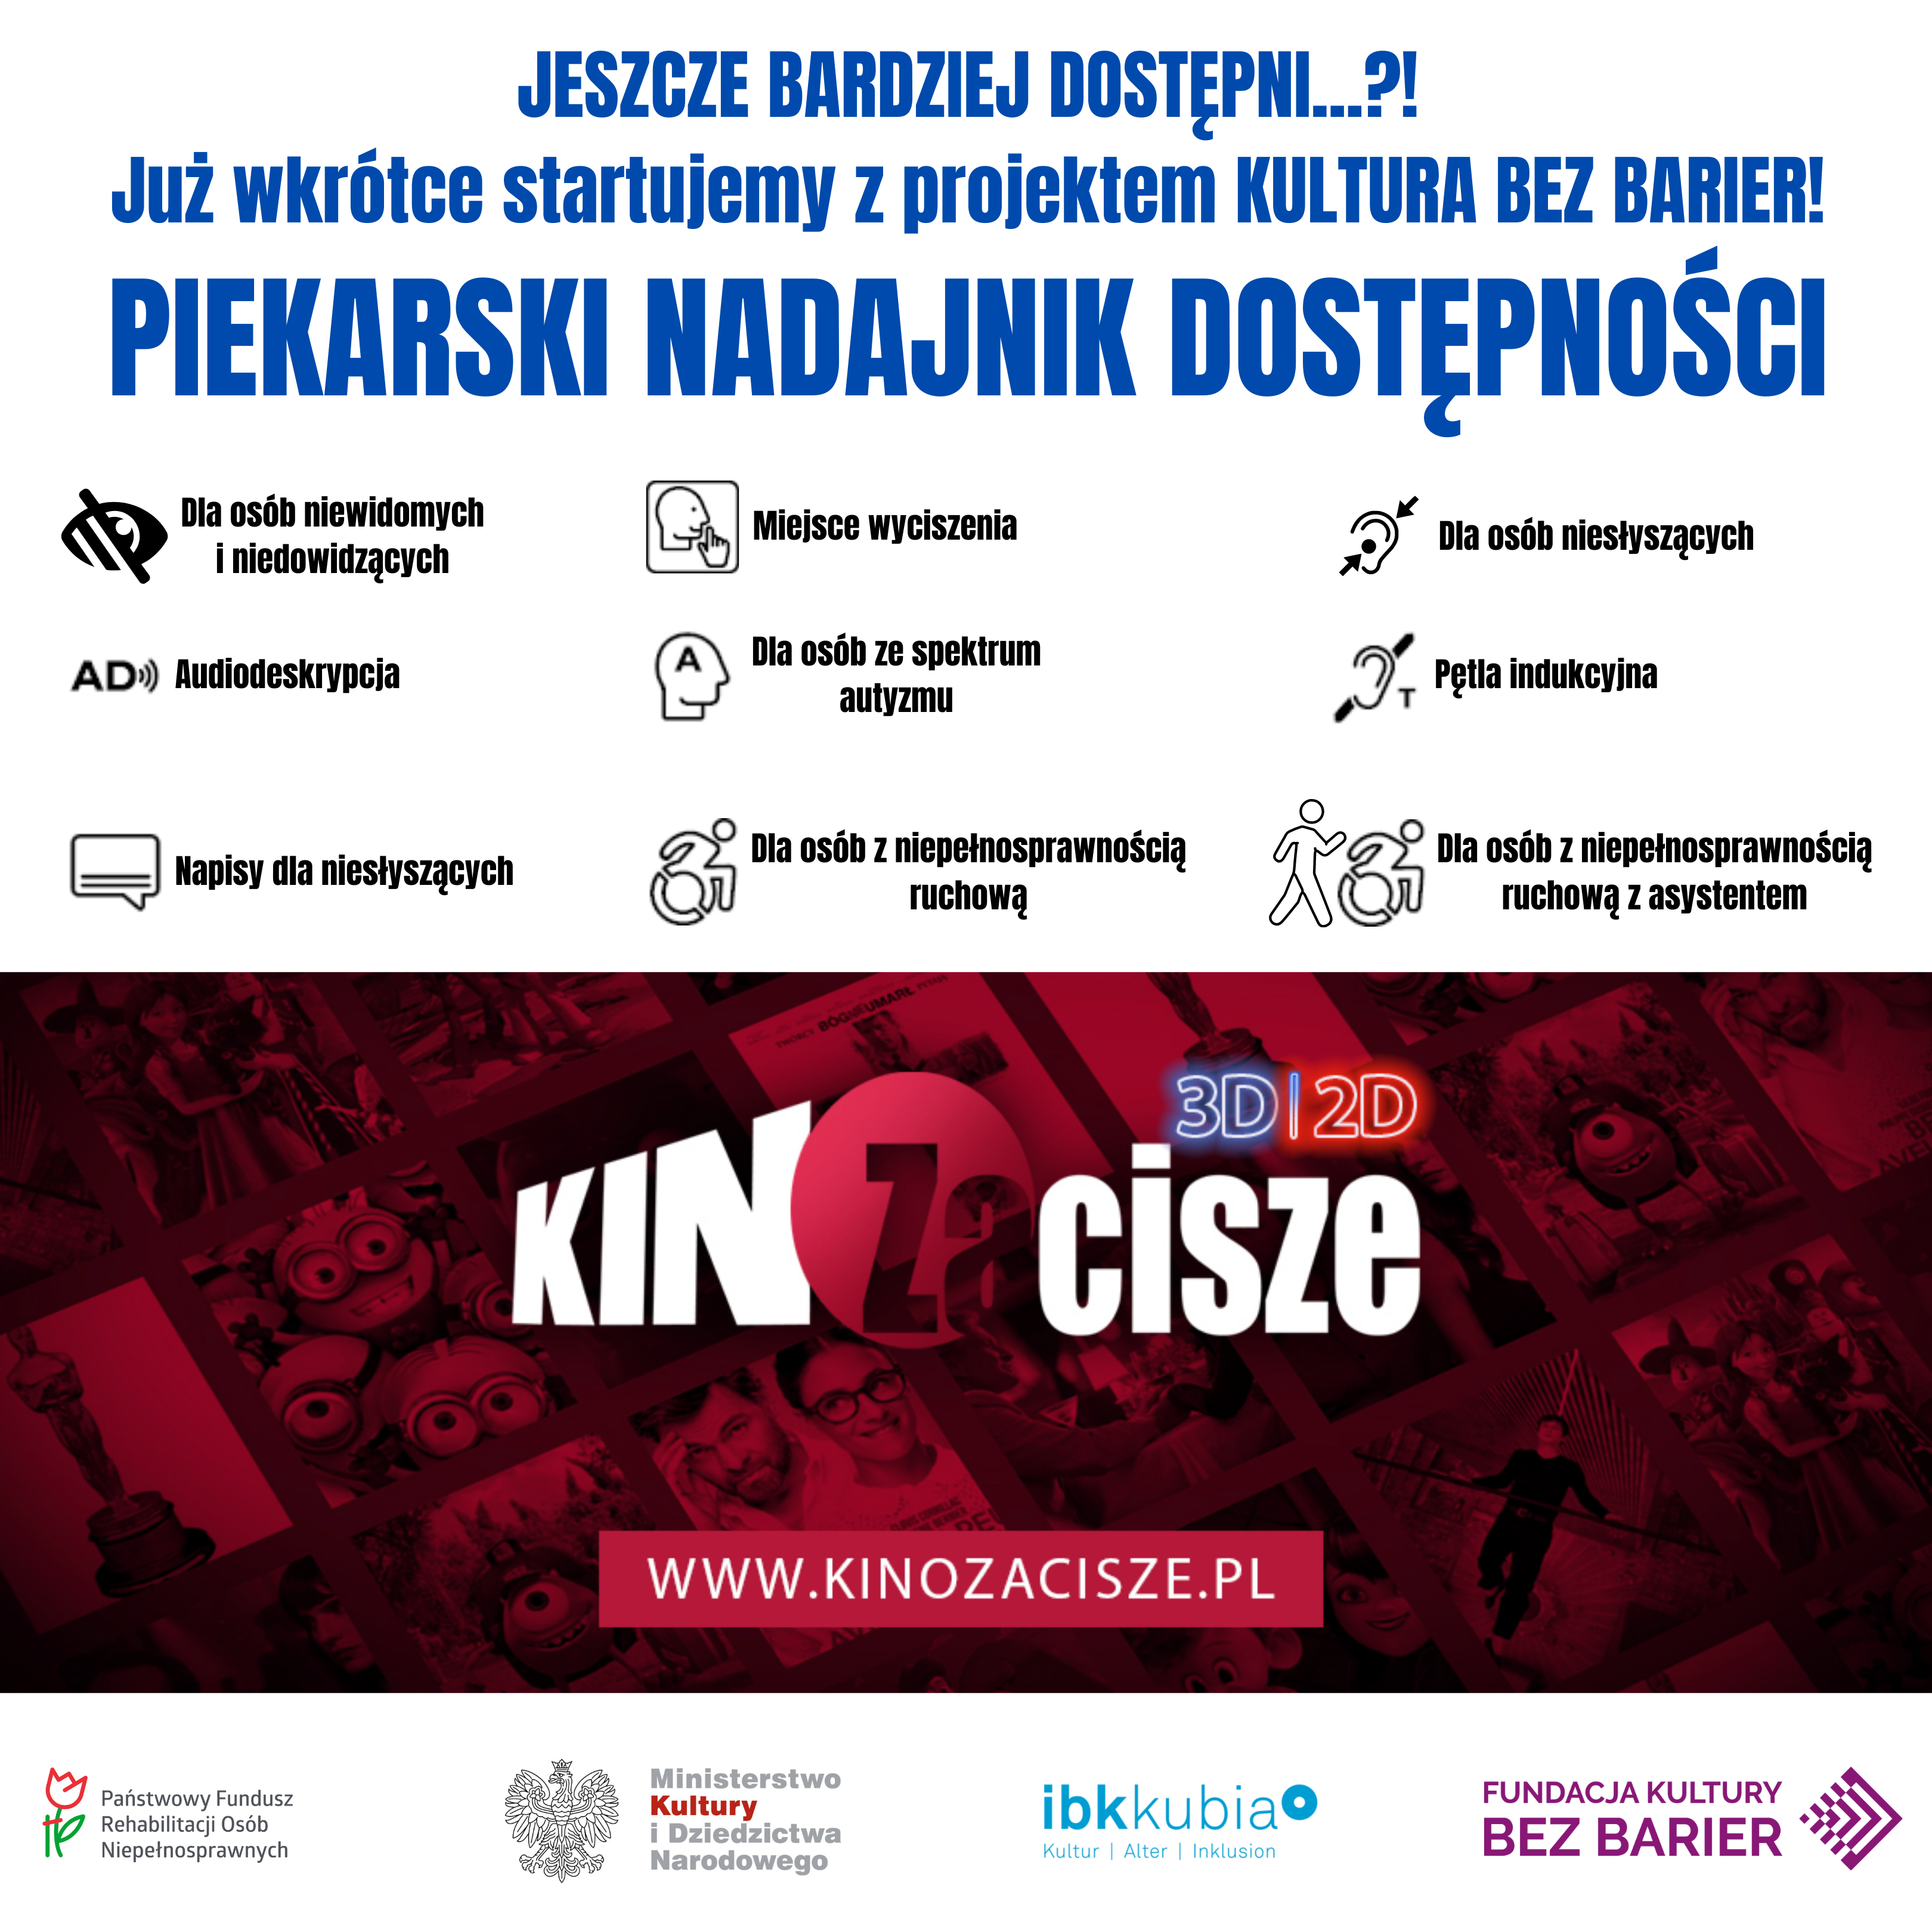 //www.kinozacisze.pl/wp-content/uploads/2022/07/KULTURA-BEZ-BARIER-w-MDK.png